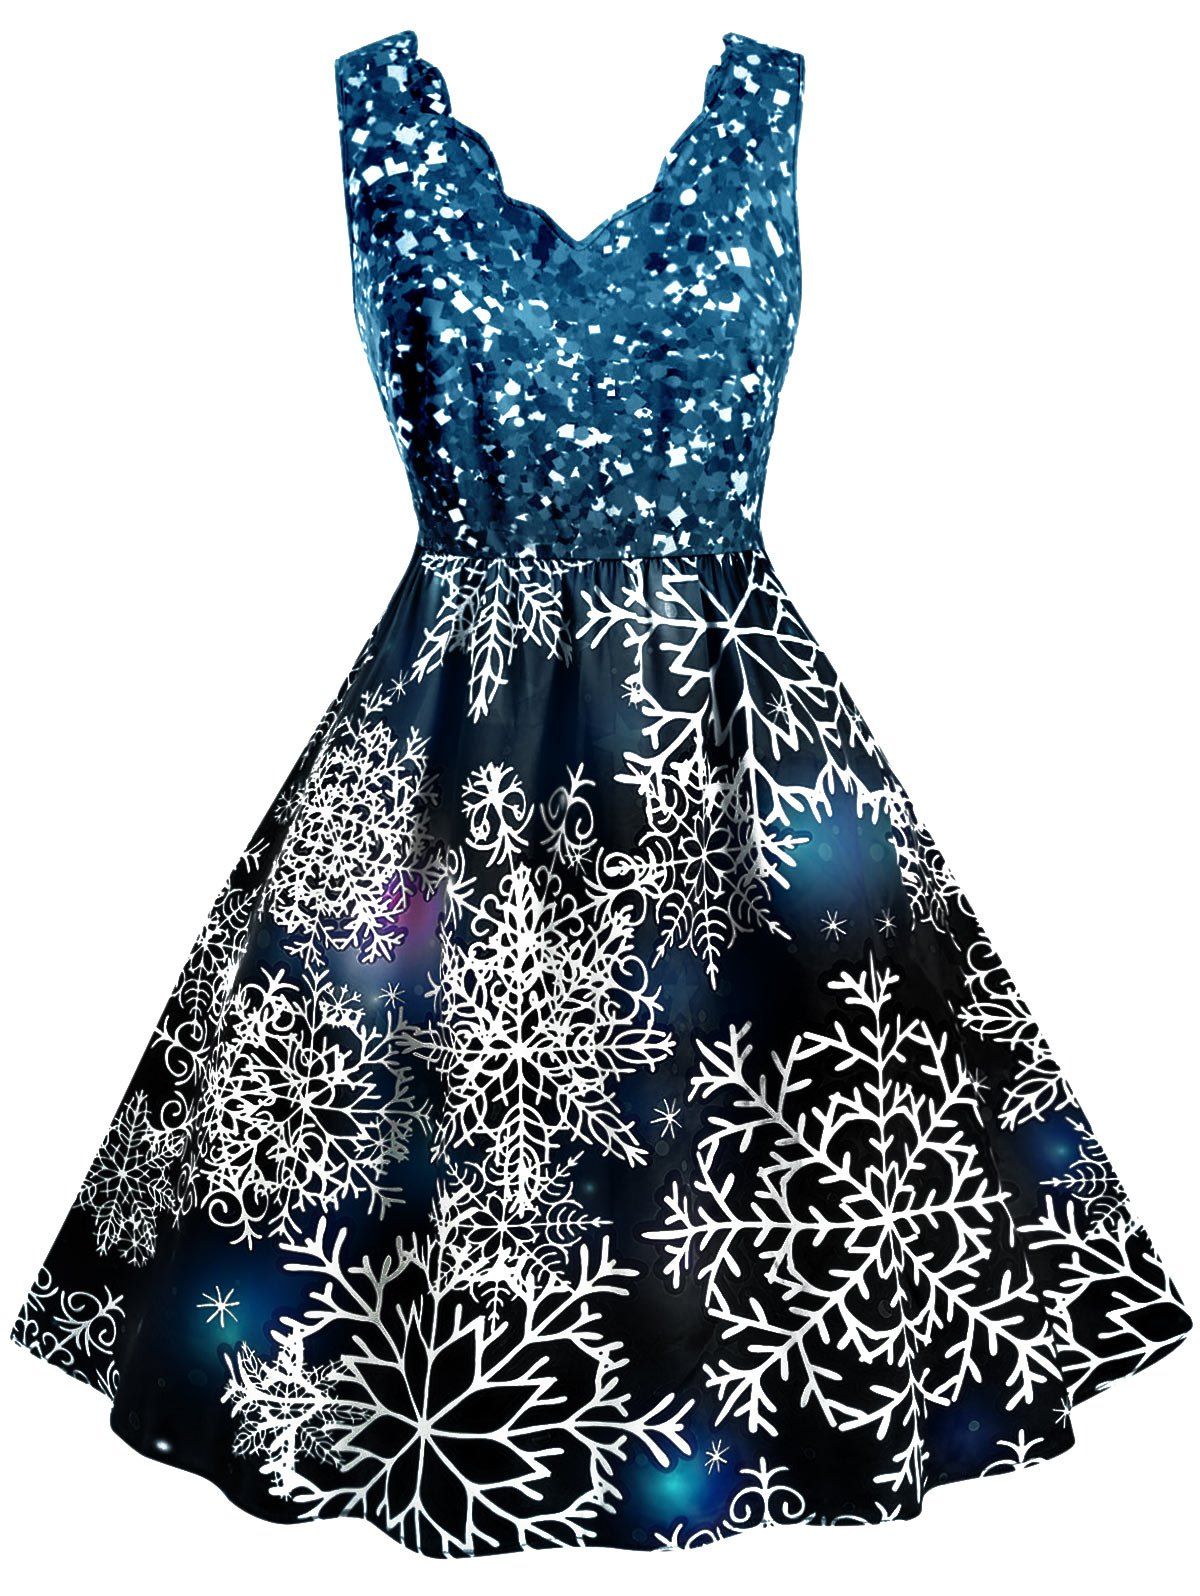 Snowflake Dress – Fashion dresses